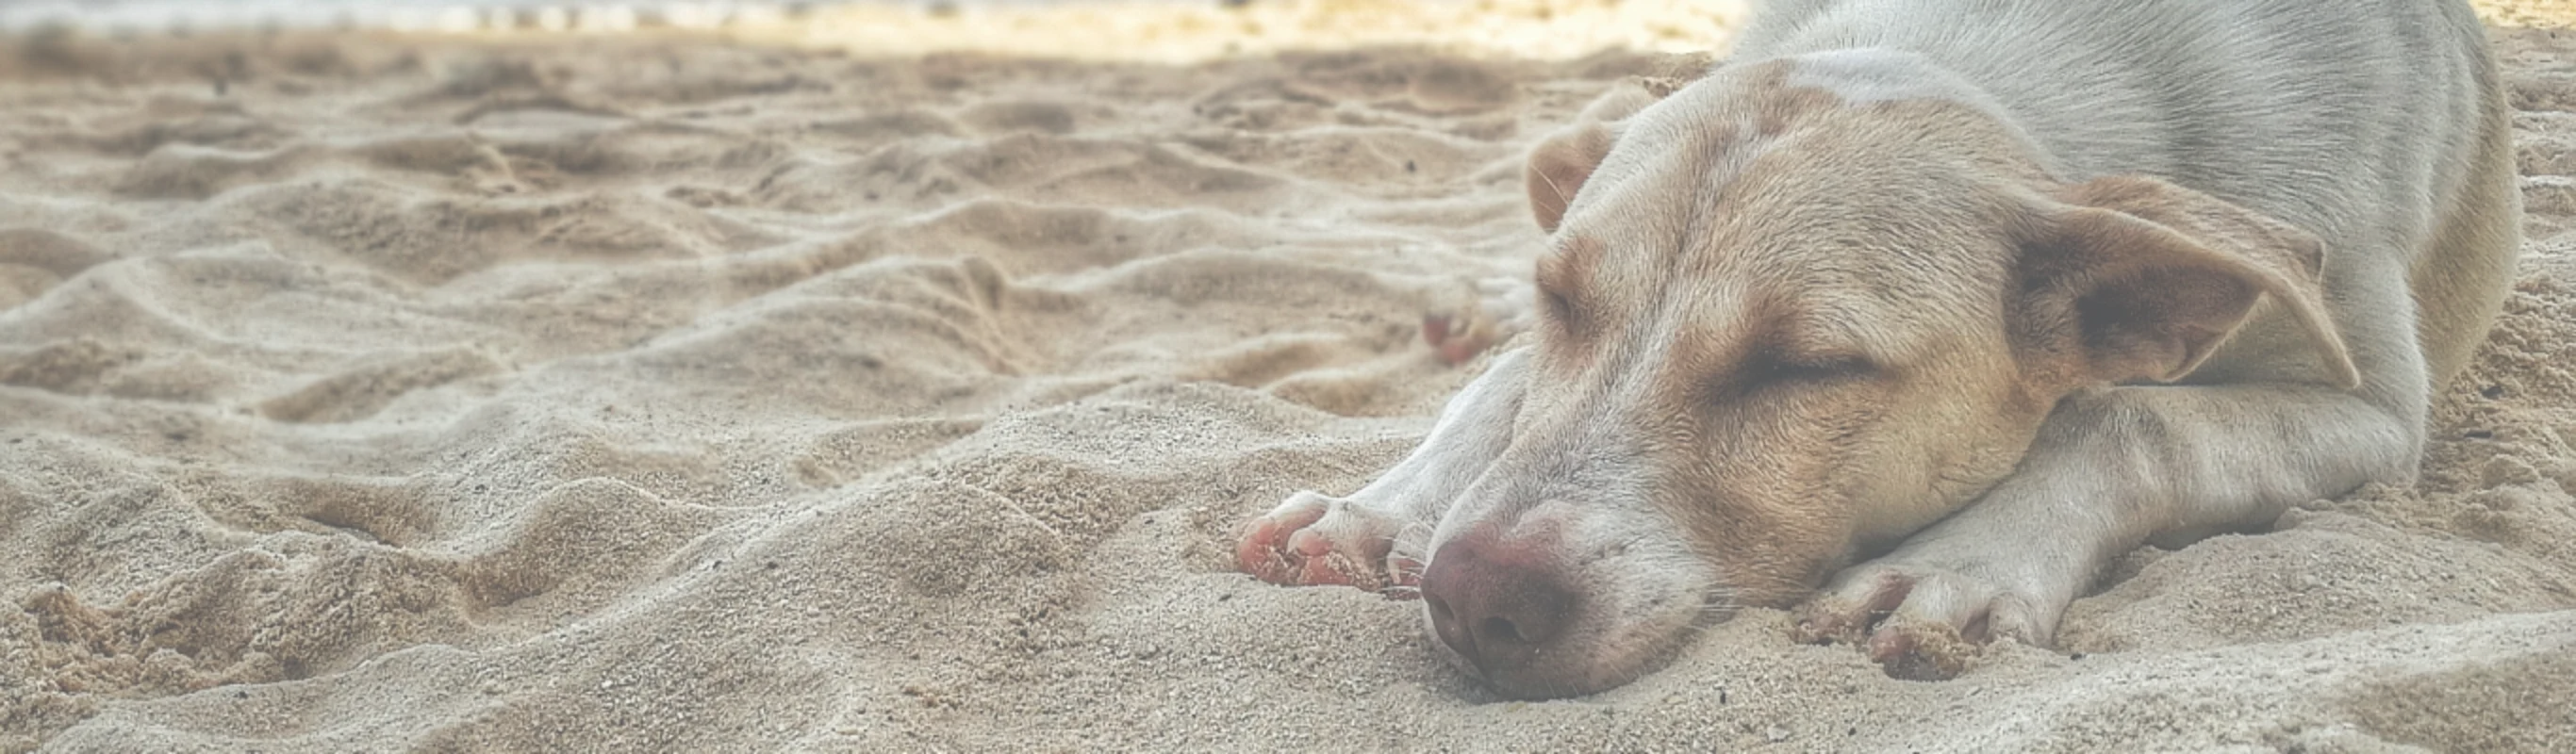 dog sleeping in sand